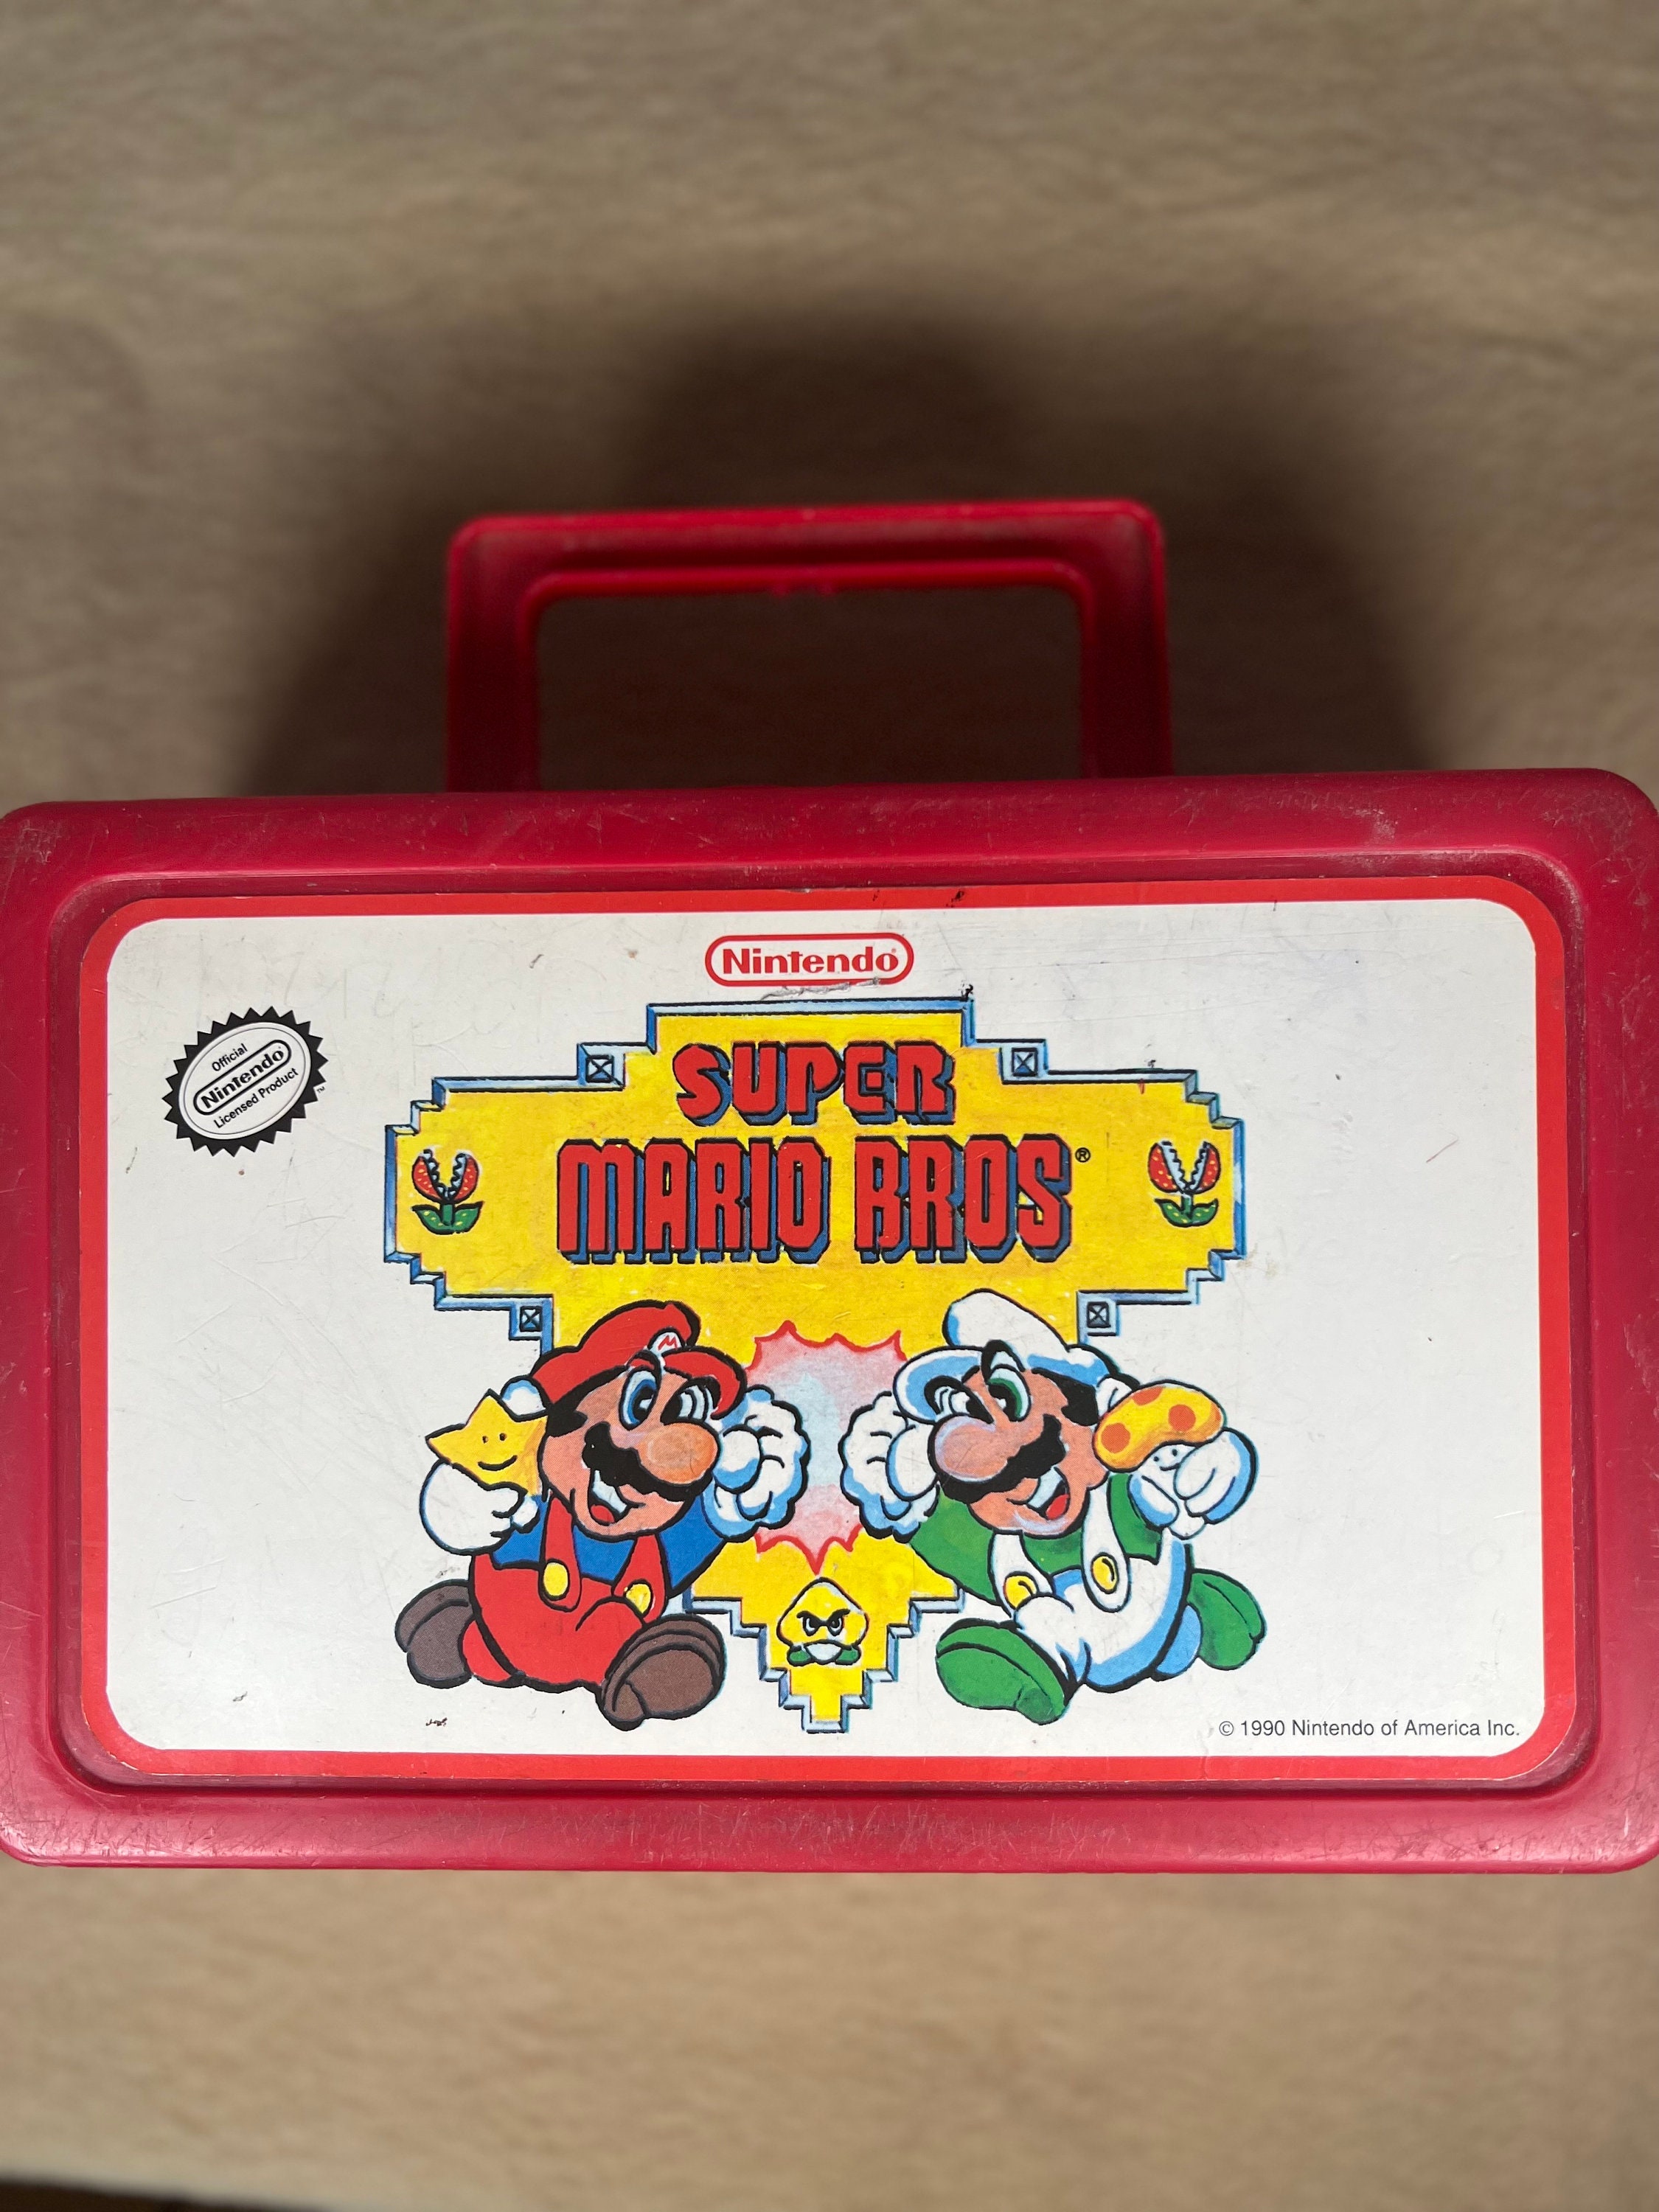 Super Mario thermos from 1988 : r/nostalgia